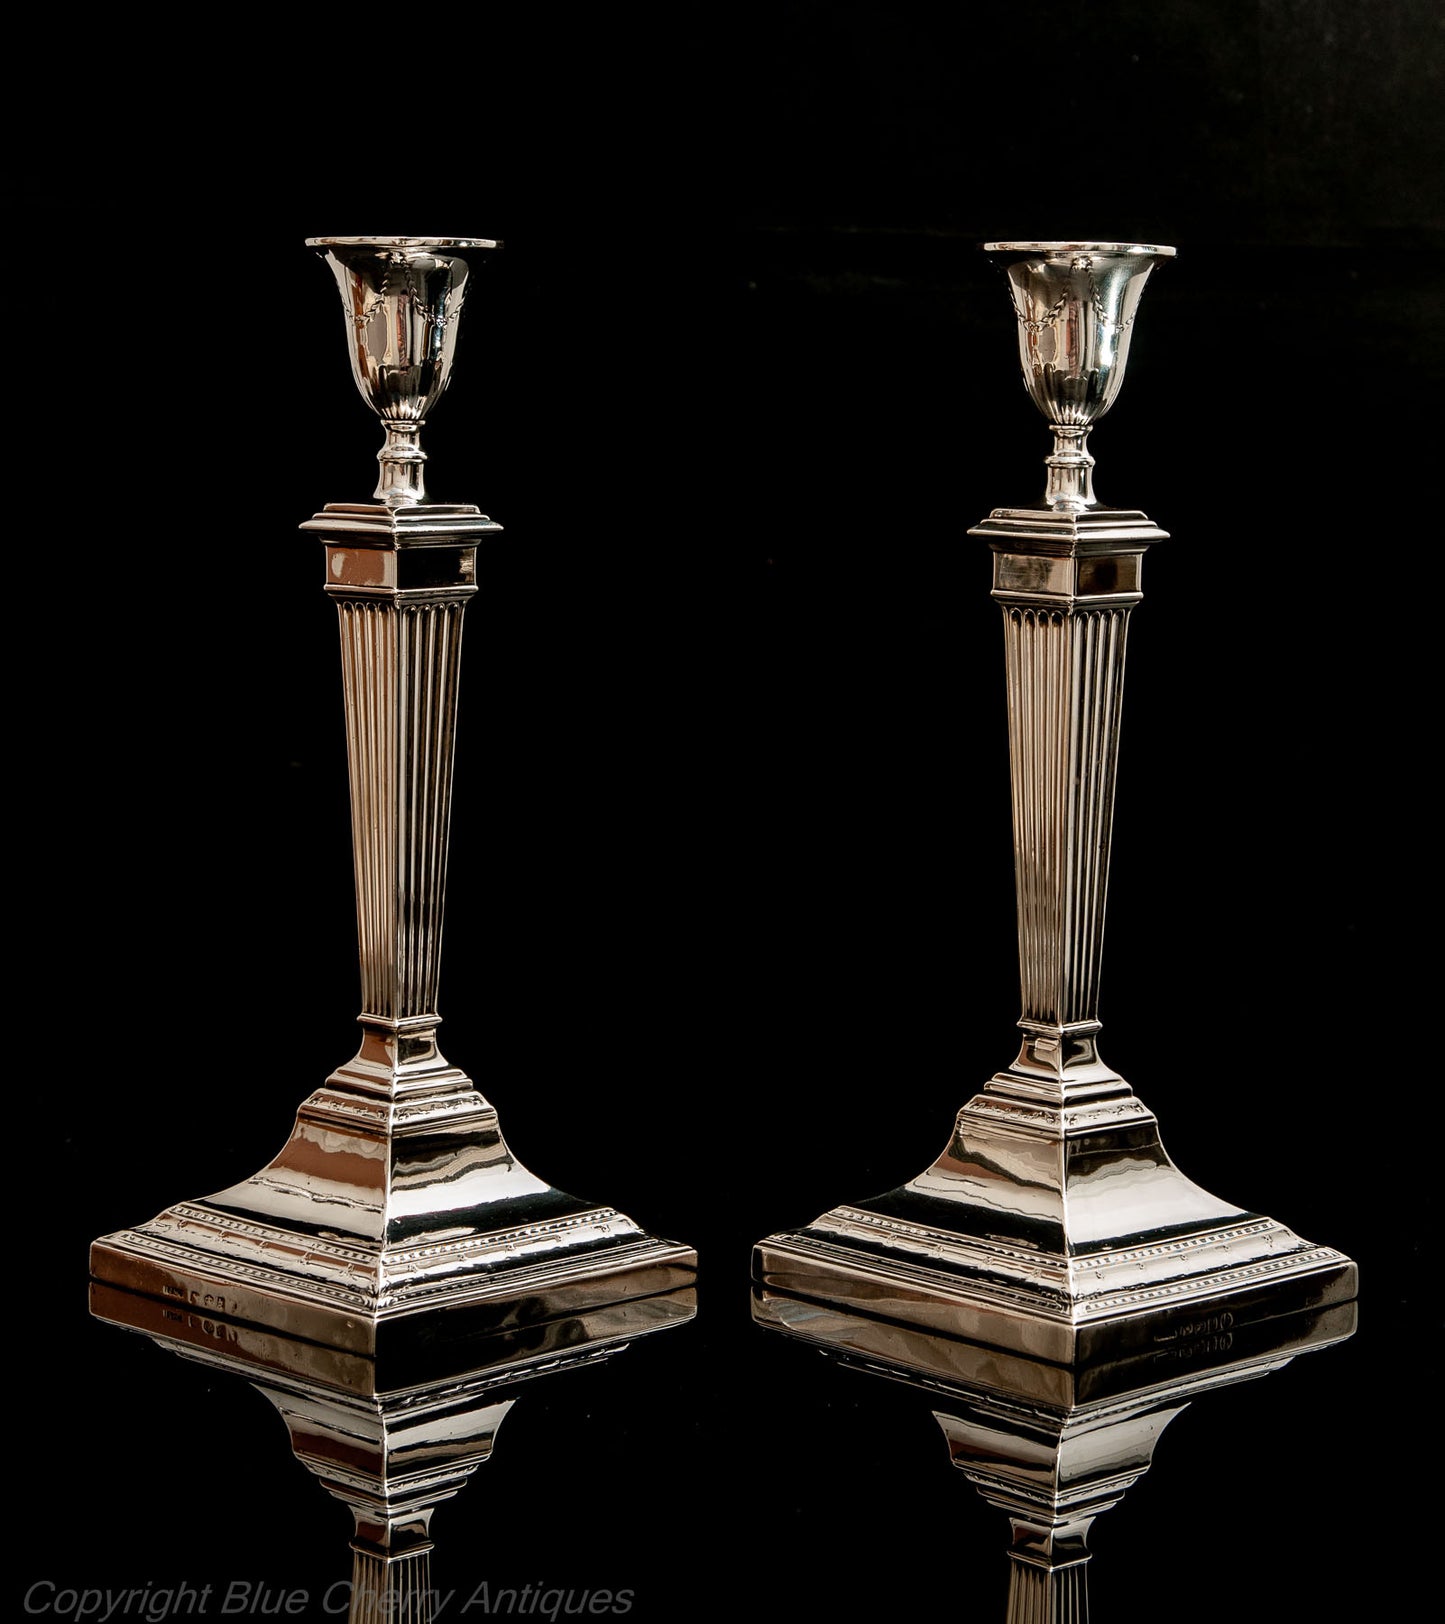 Pair of 18th Century Georgian Silver Candlesticks John Parsons & Co Sheffield (Code 1646)